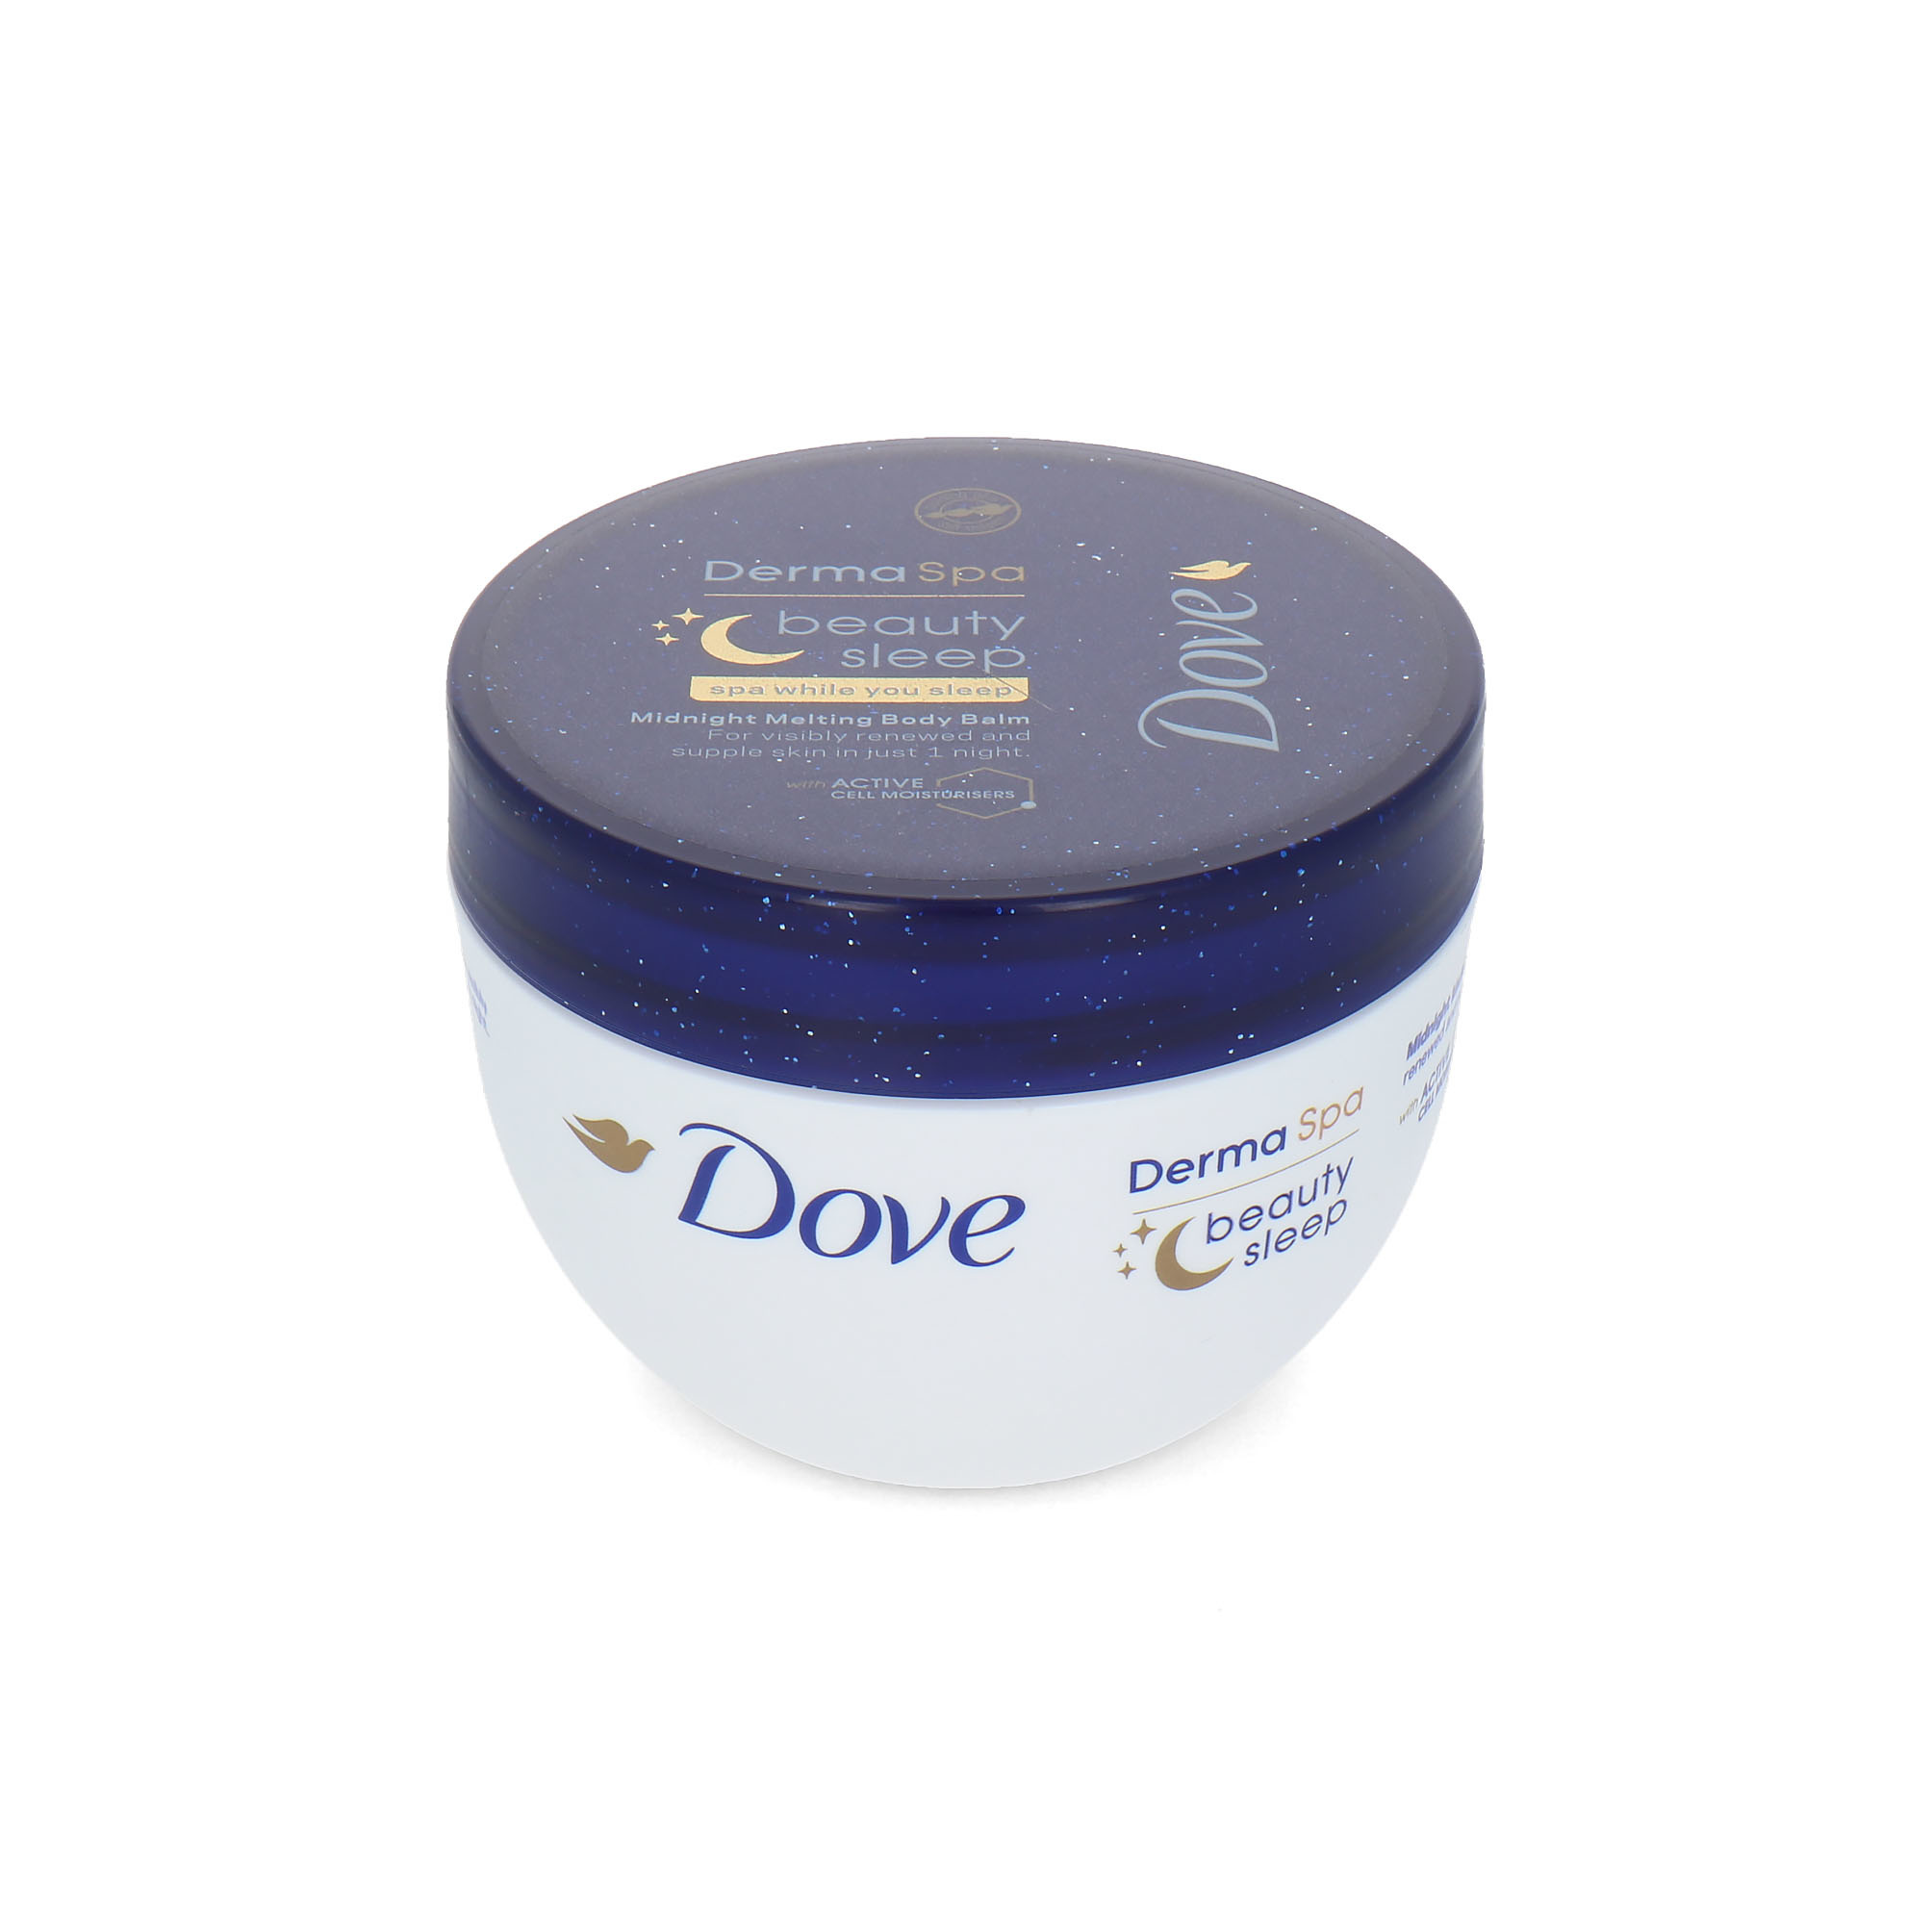 Dove Derma Spa Beauty Sleep Midnight Melting Crème pour le corps - 300 ml